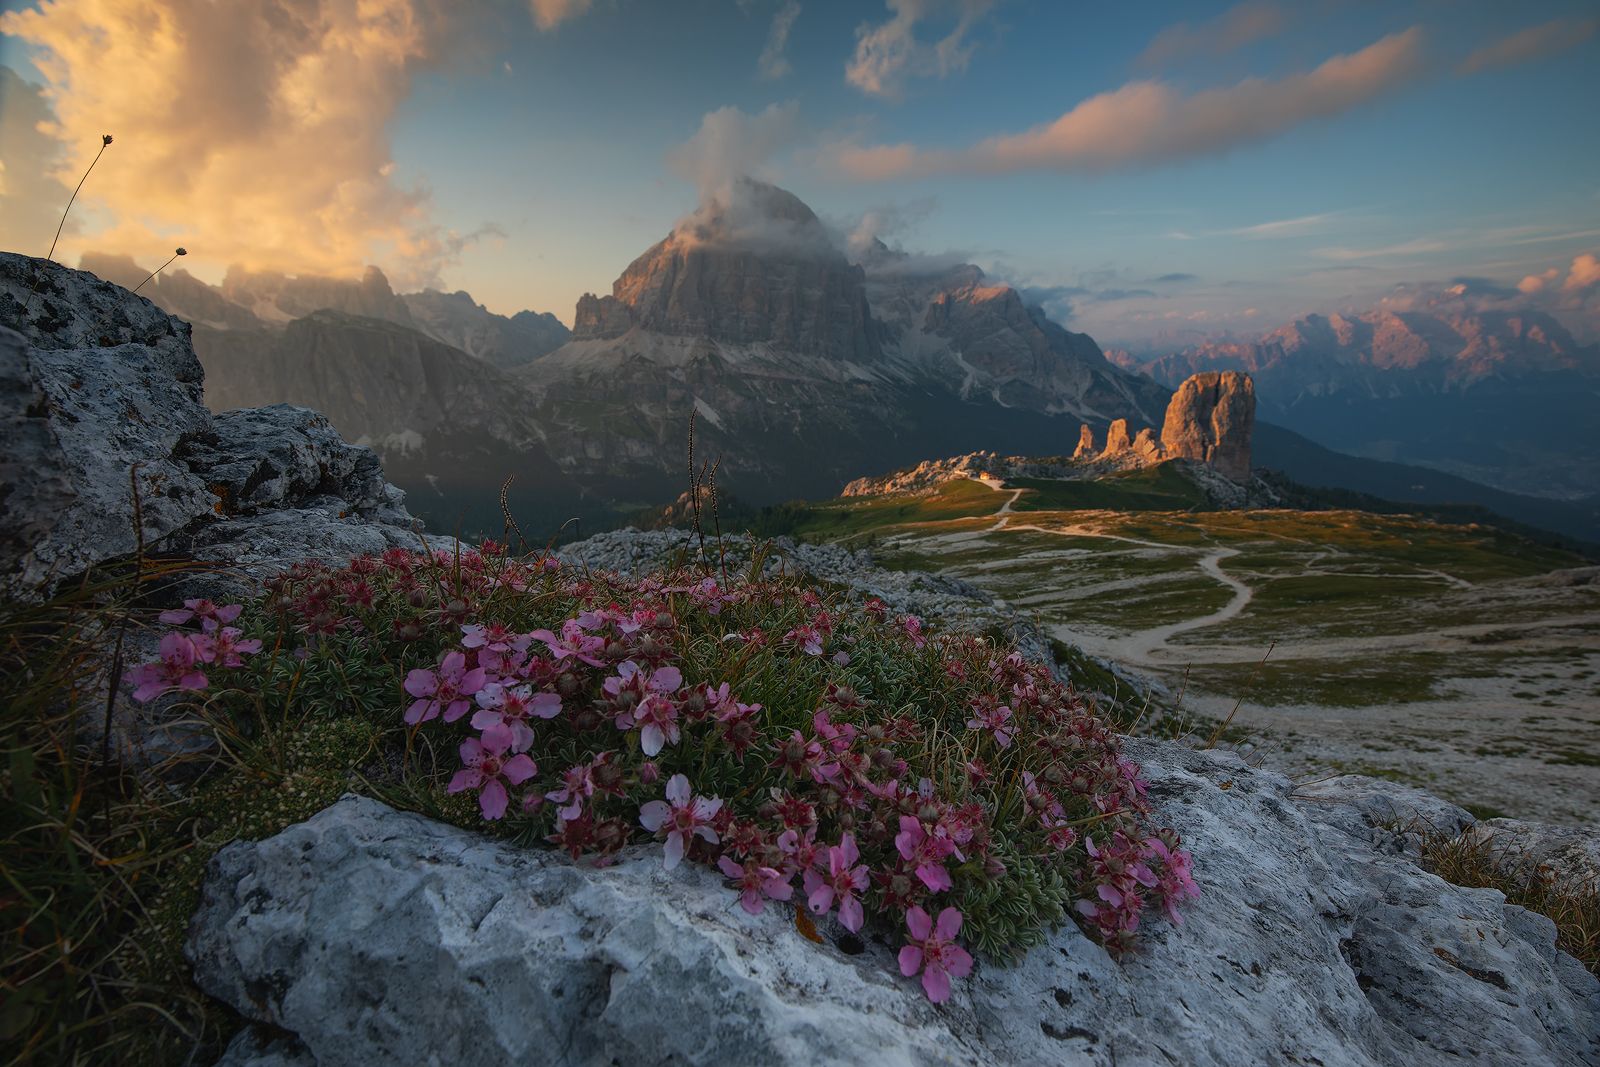 #mountains #dolomites #flowers #peaks #italy #clouds #sunset #light #misty, Lazar Ioan Ovidiu